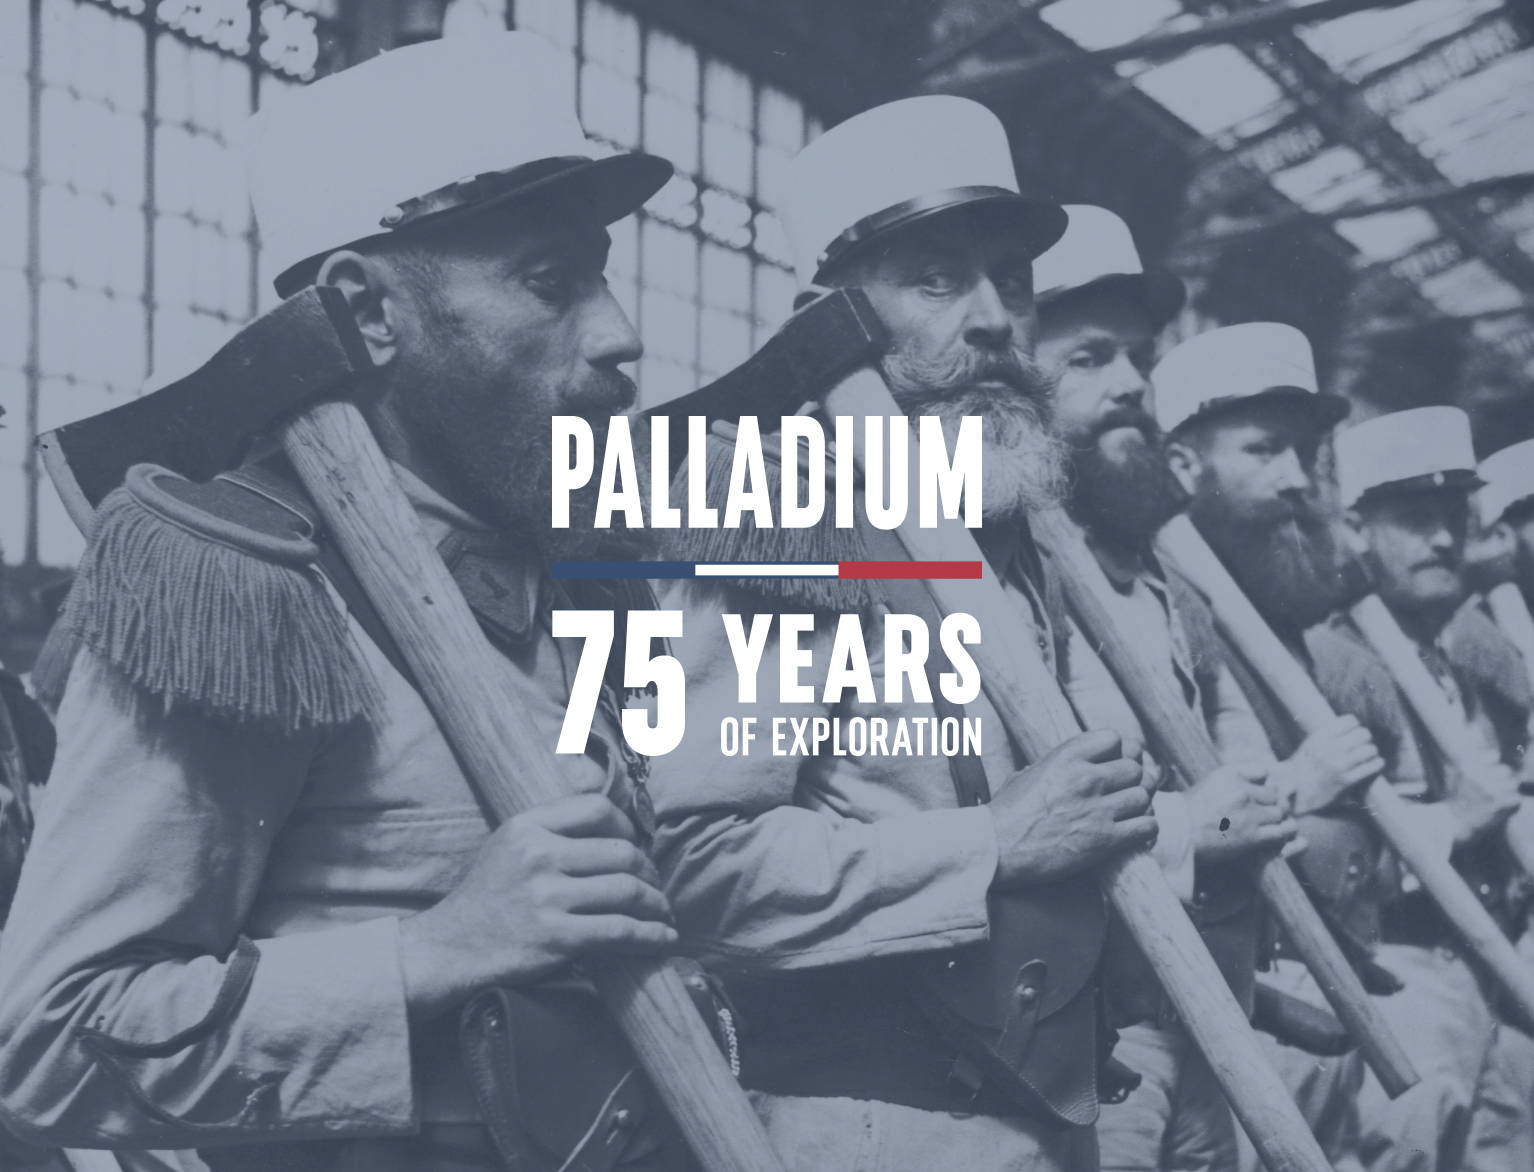 25 Years Ago: New York City's Legendary Palladium Closes